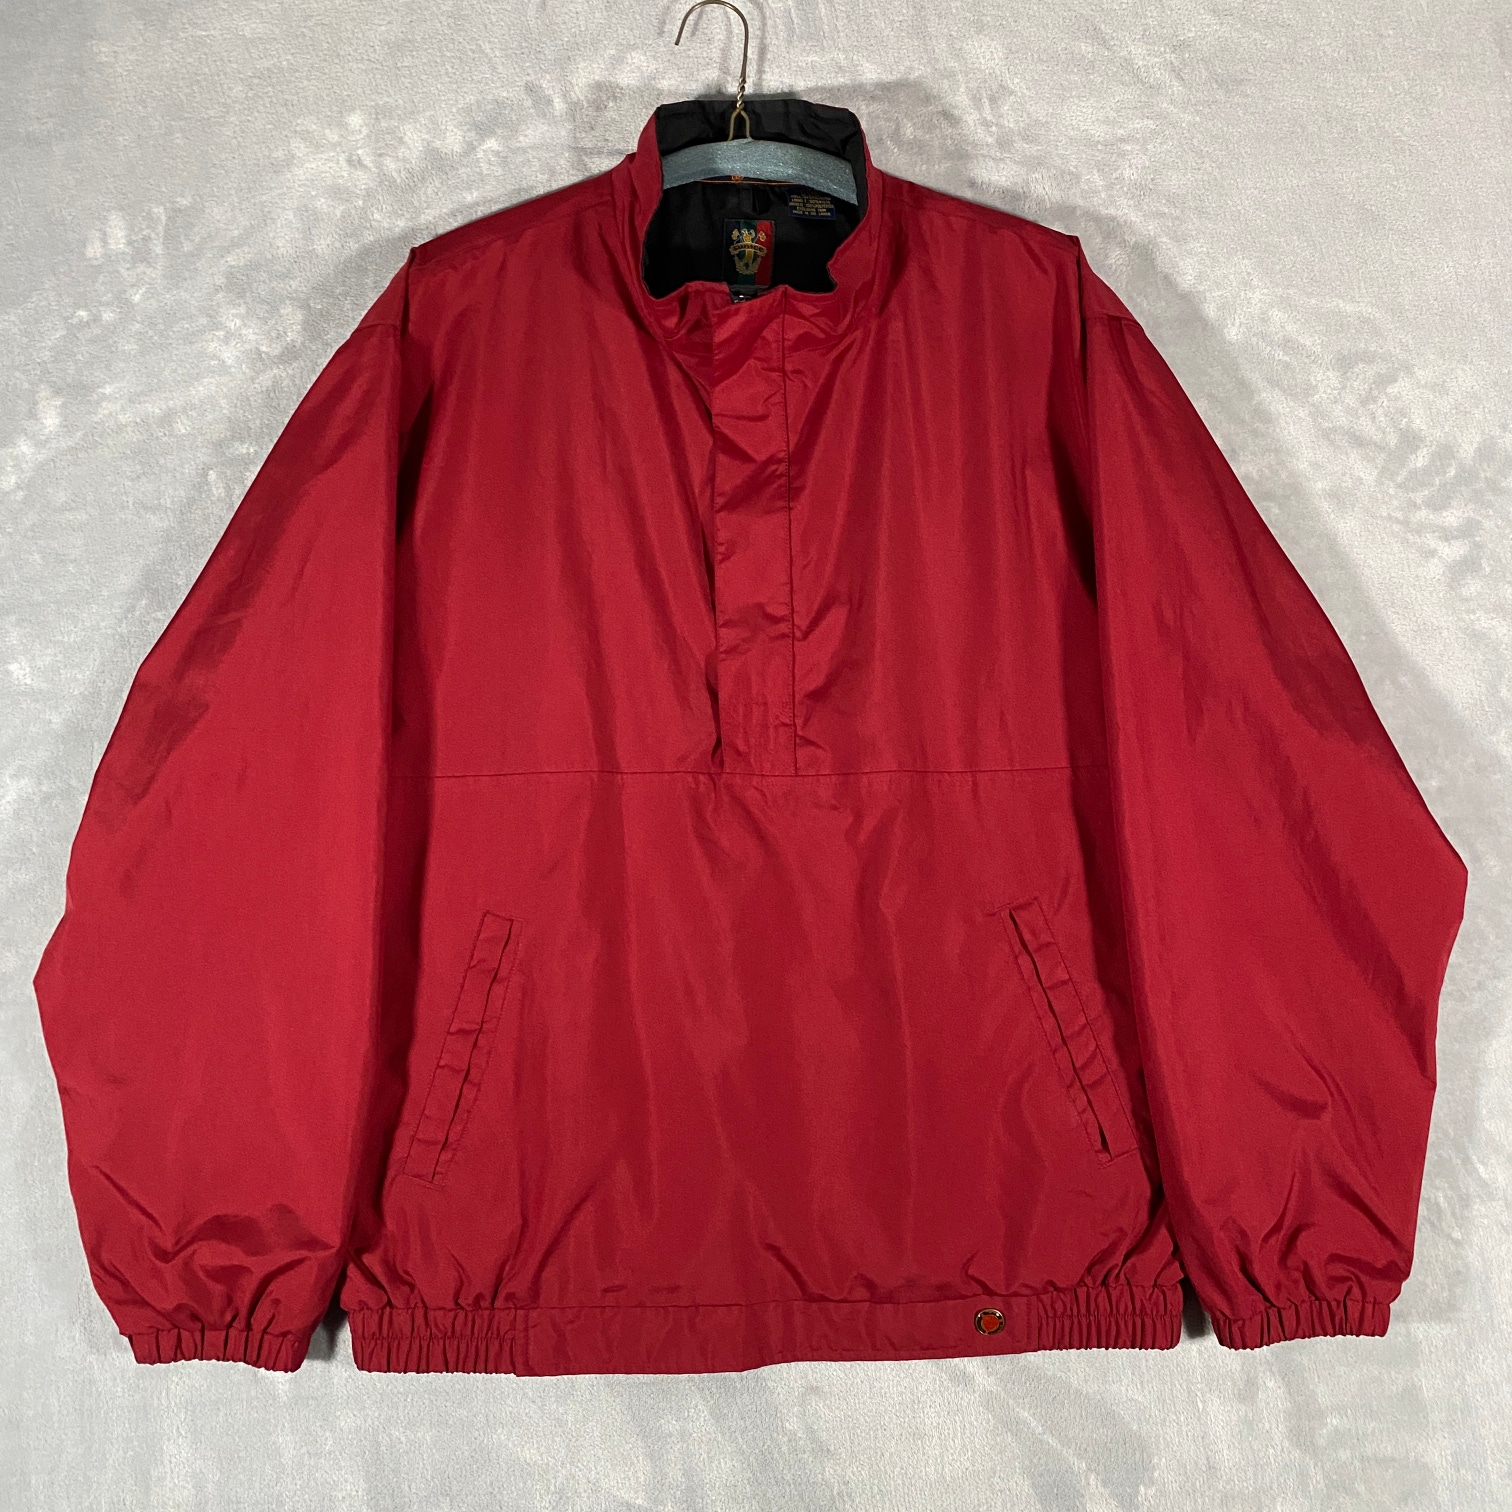 Sunice Men's Golf Jacket Size L Crimson 1/2 Zip Nylon Lined Wind Rain Resistant